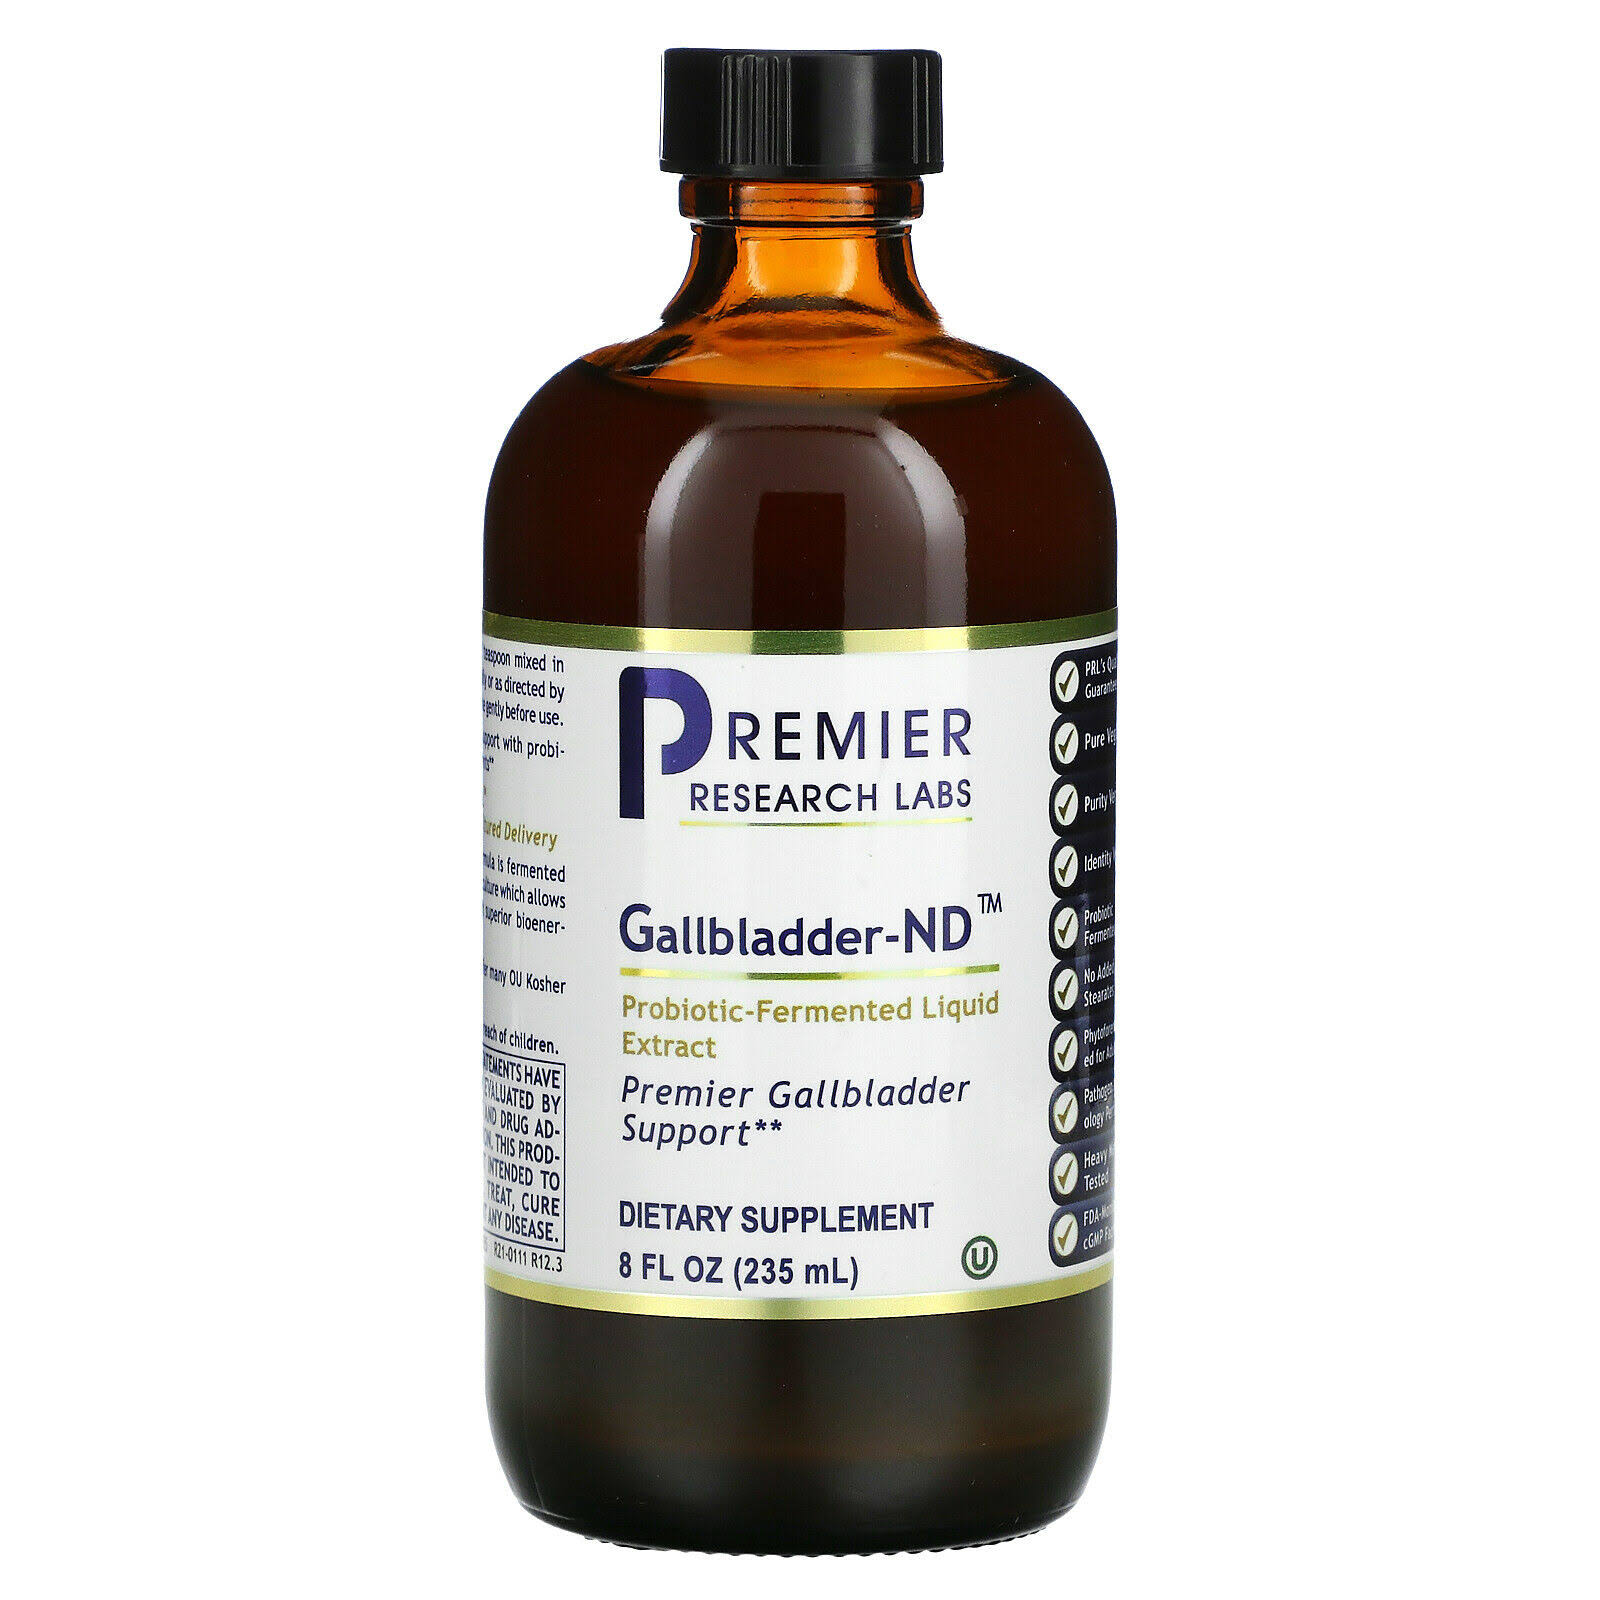 Premier Research Labs Gallbladder-ND - 8 FL oz (235 ml)